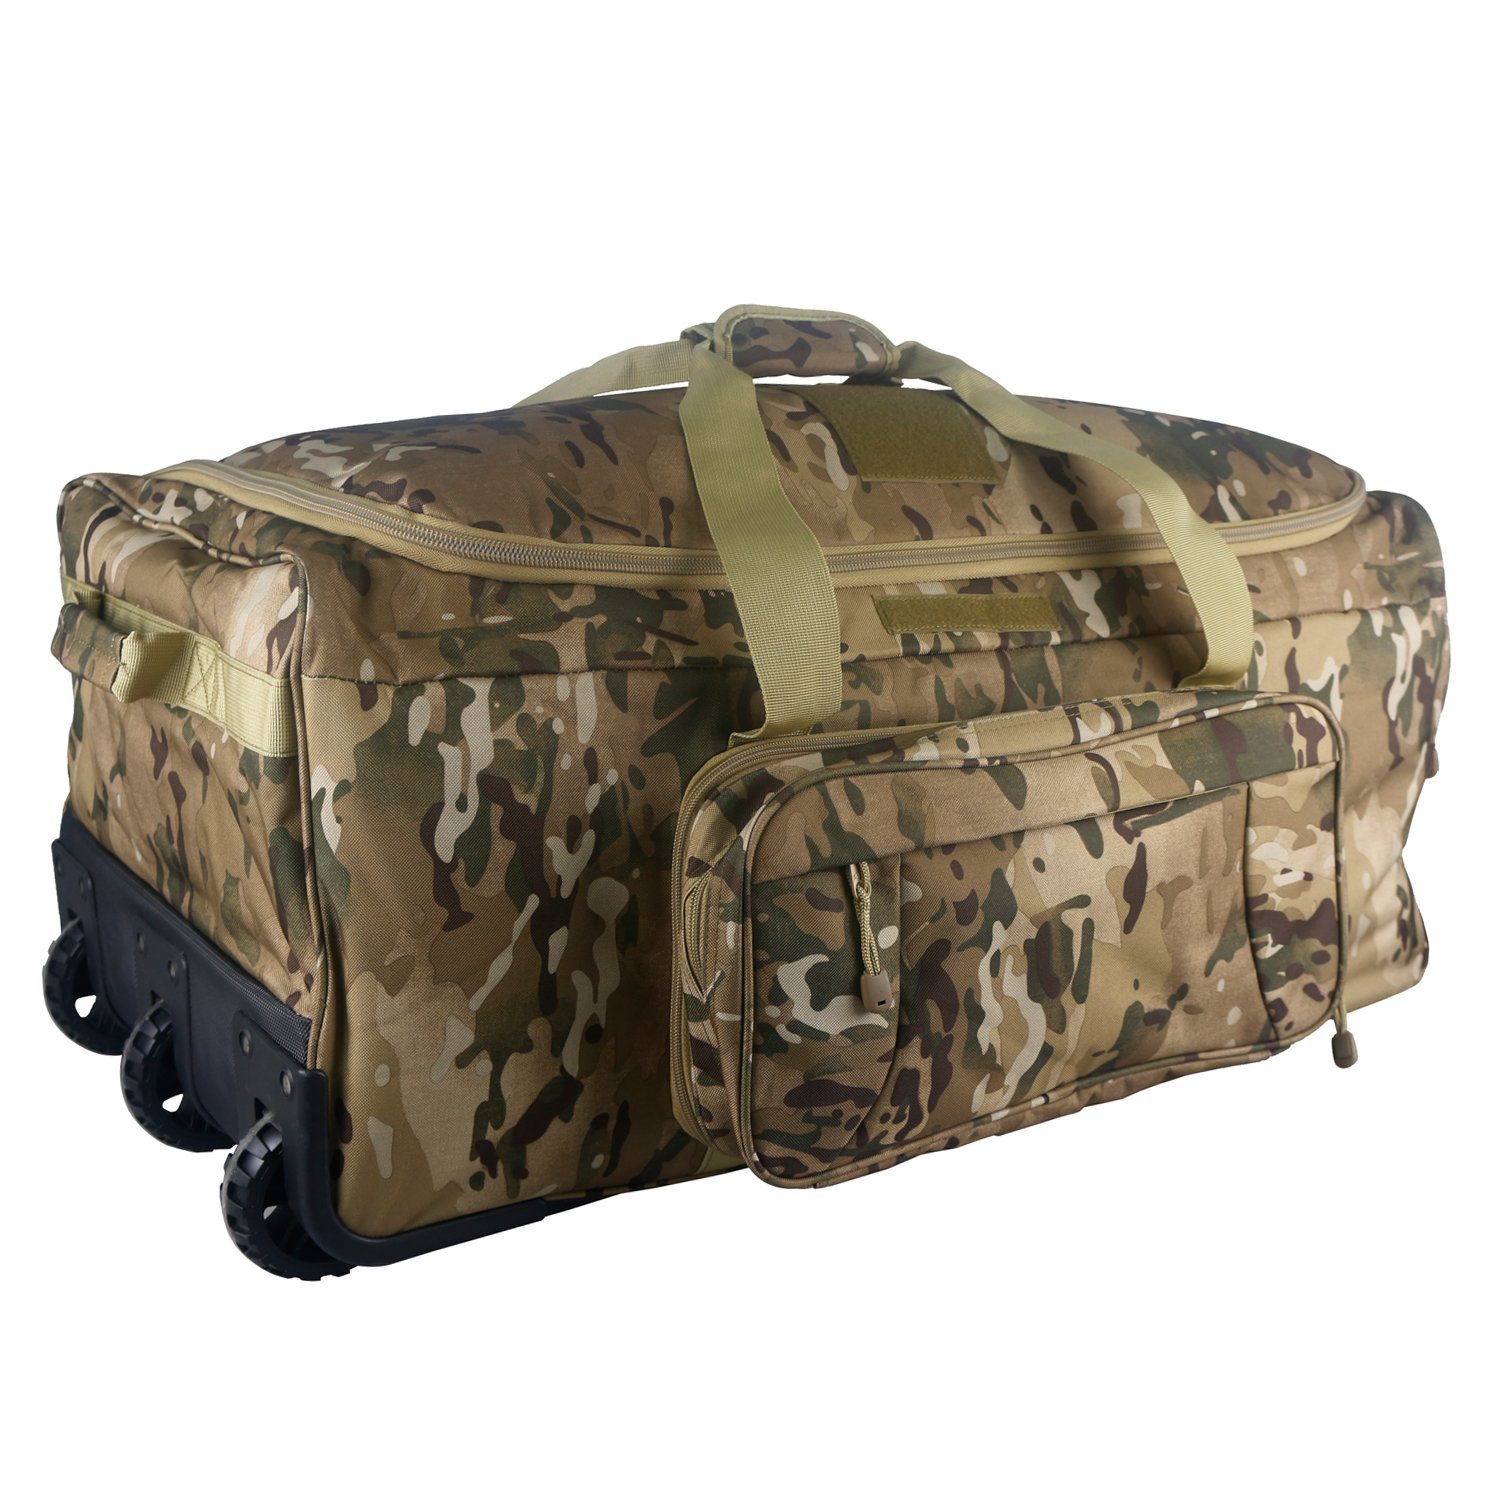 Huge Capacity Traveler Hotel Luggage Trolley Roller Military Multi-Function Bag